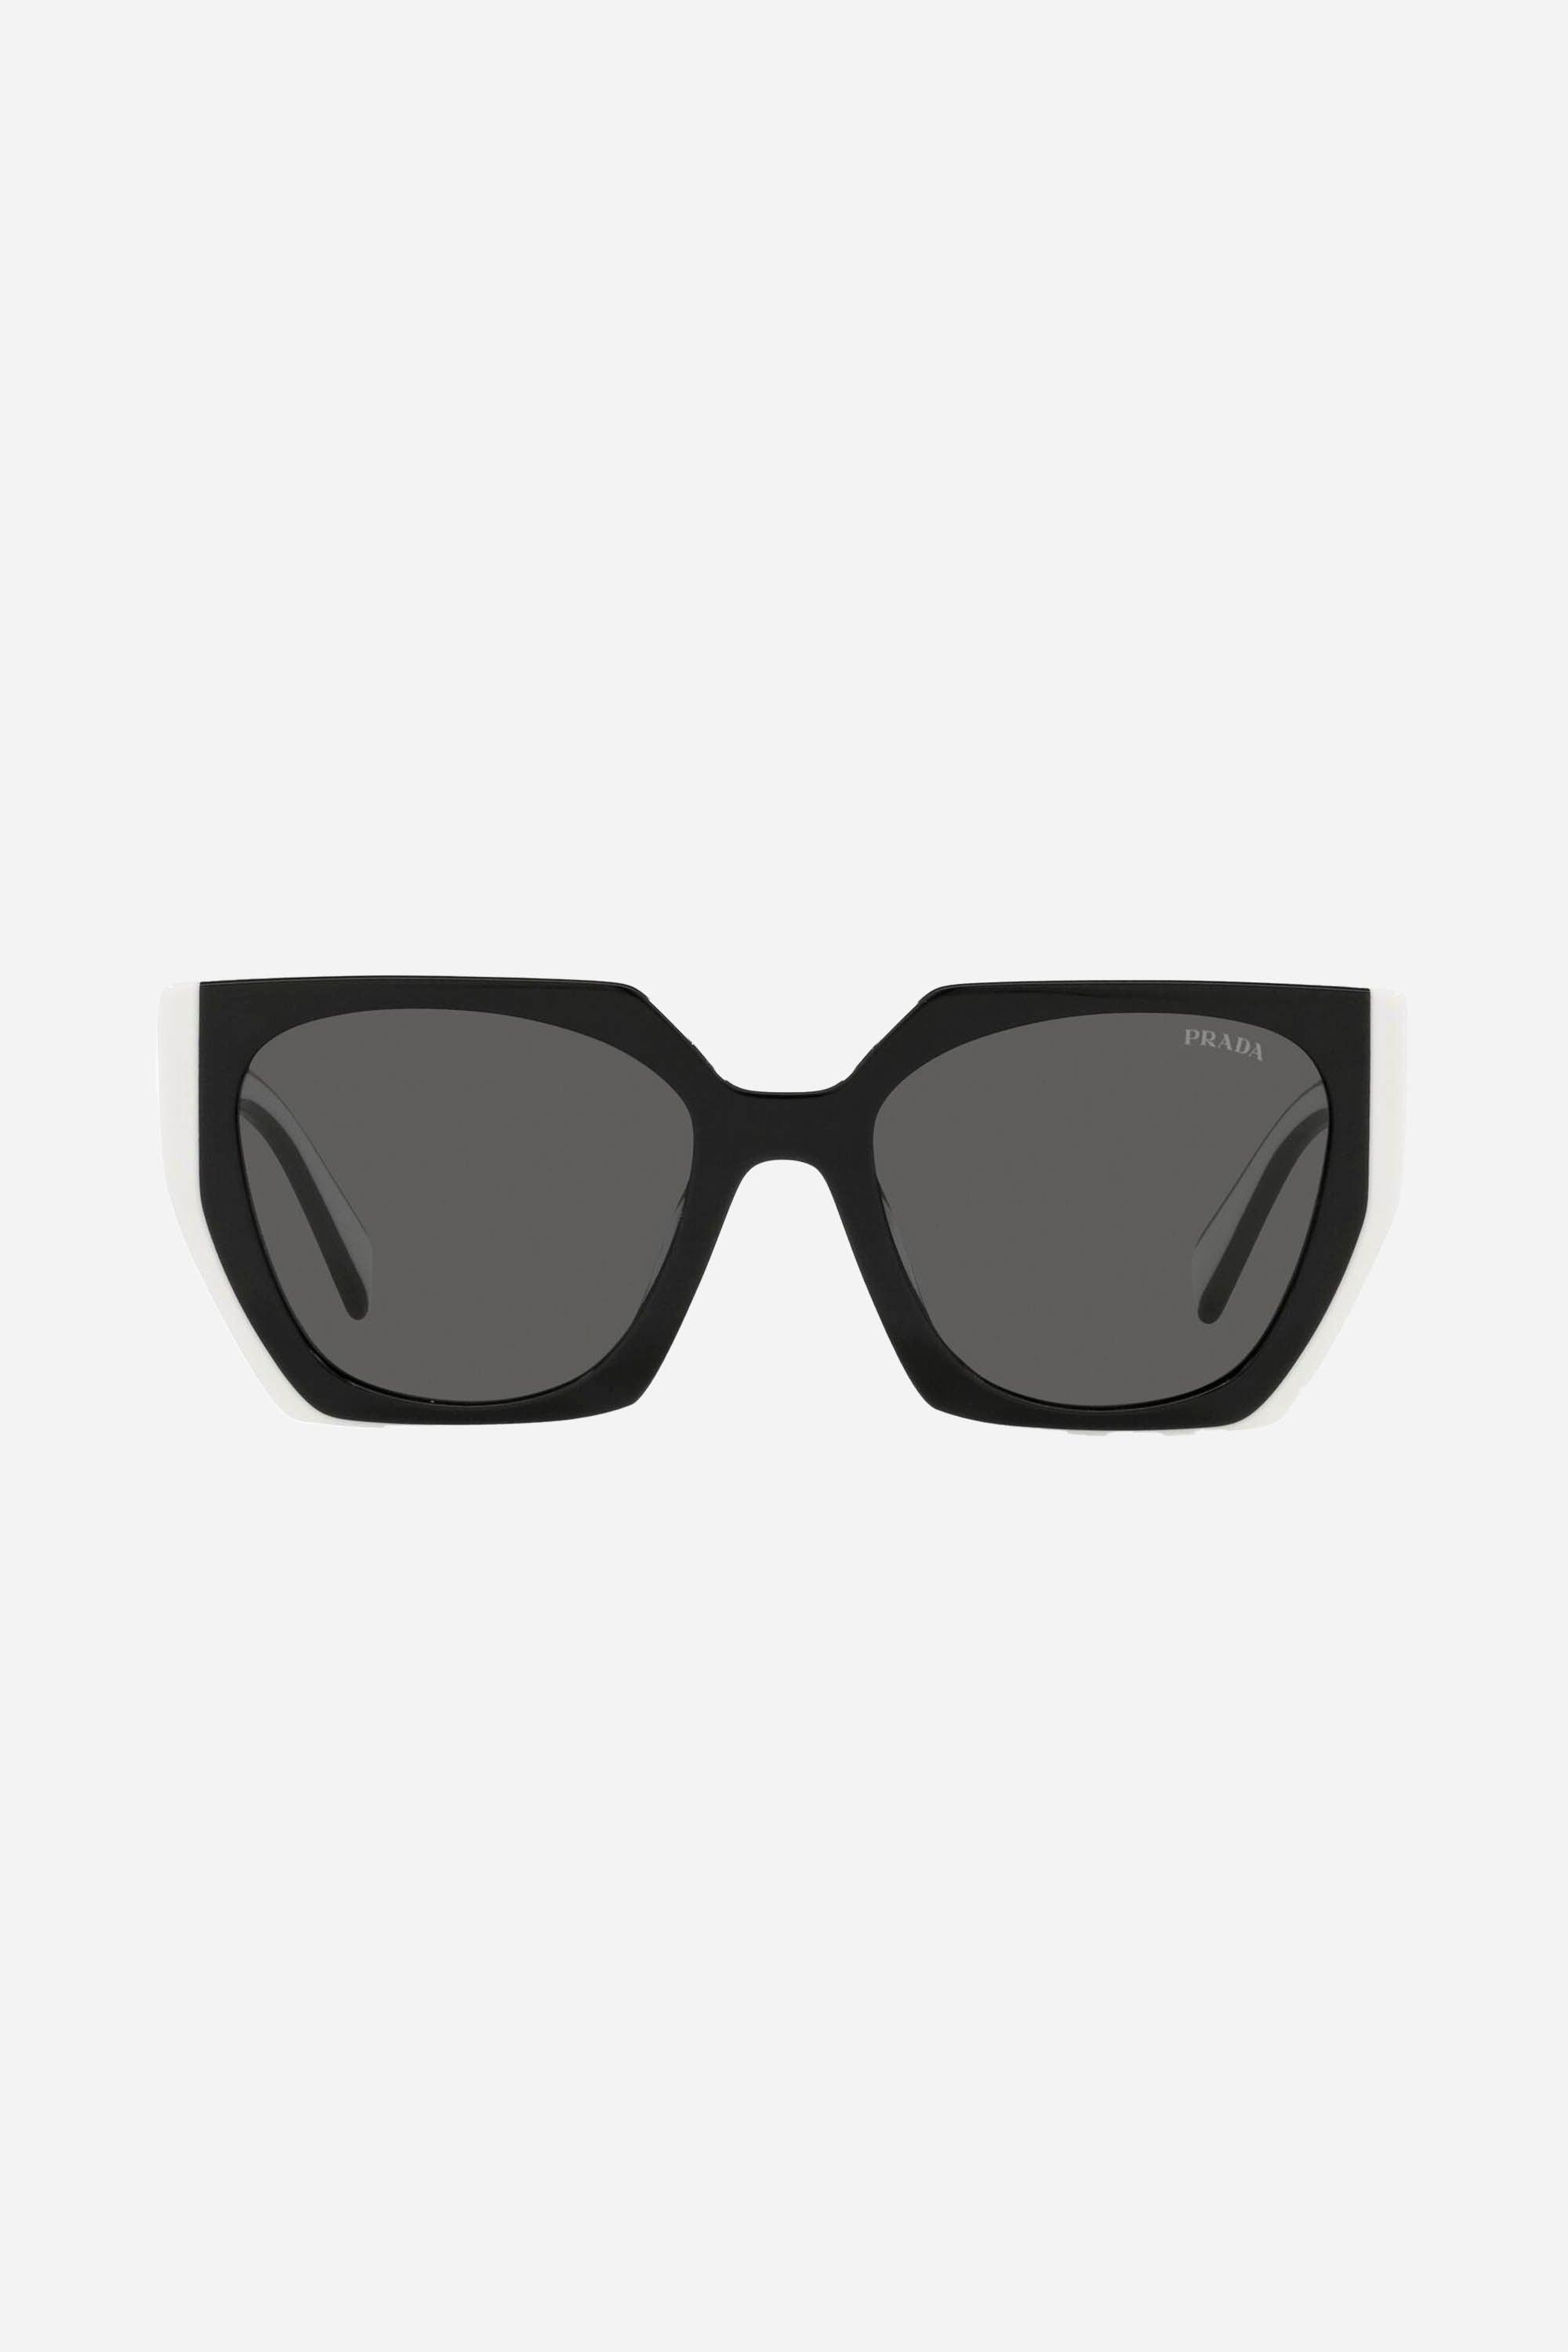 Prada Oversized Cat Eye Black And White Sunglasses in Brown | Lyst